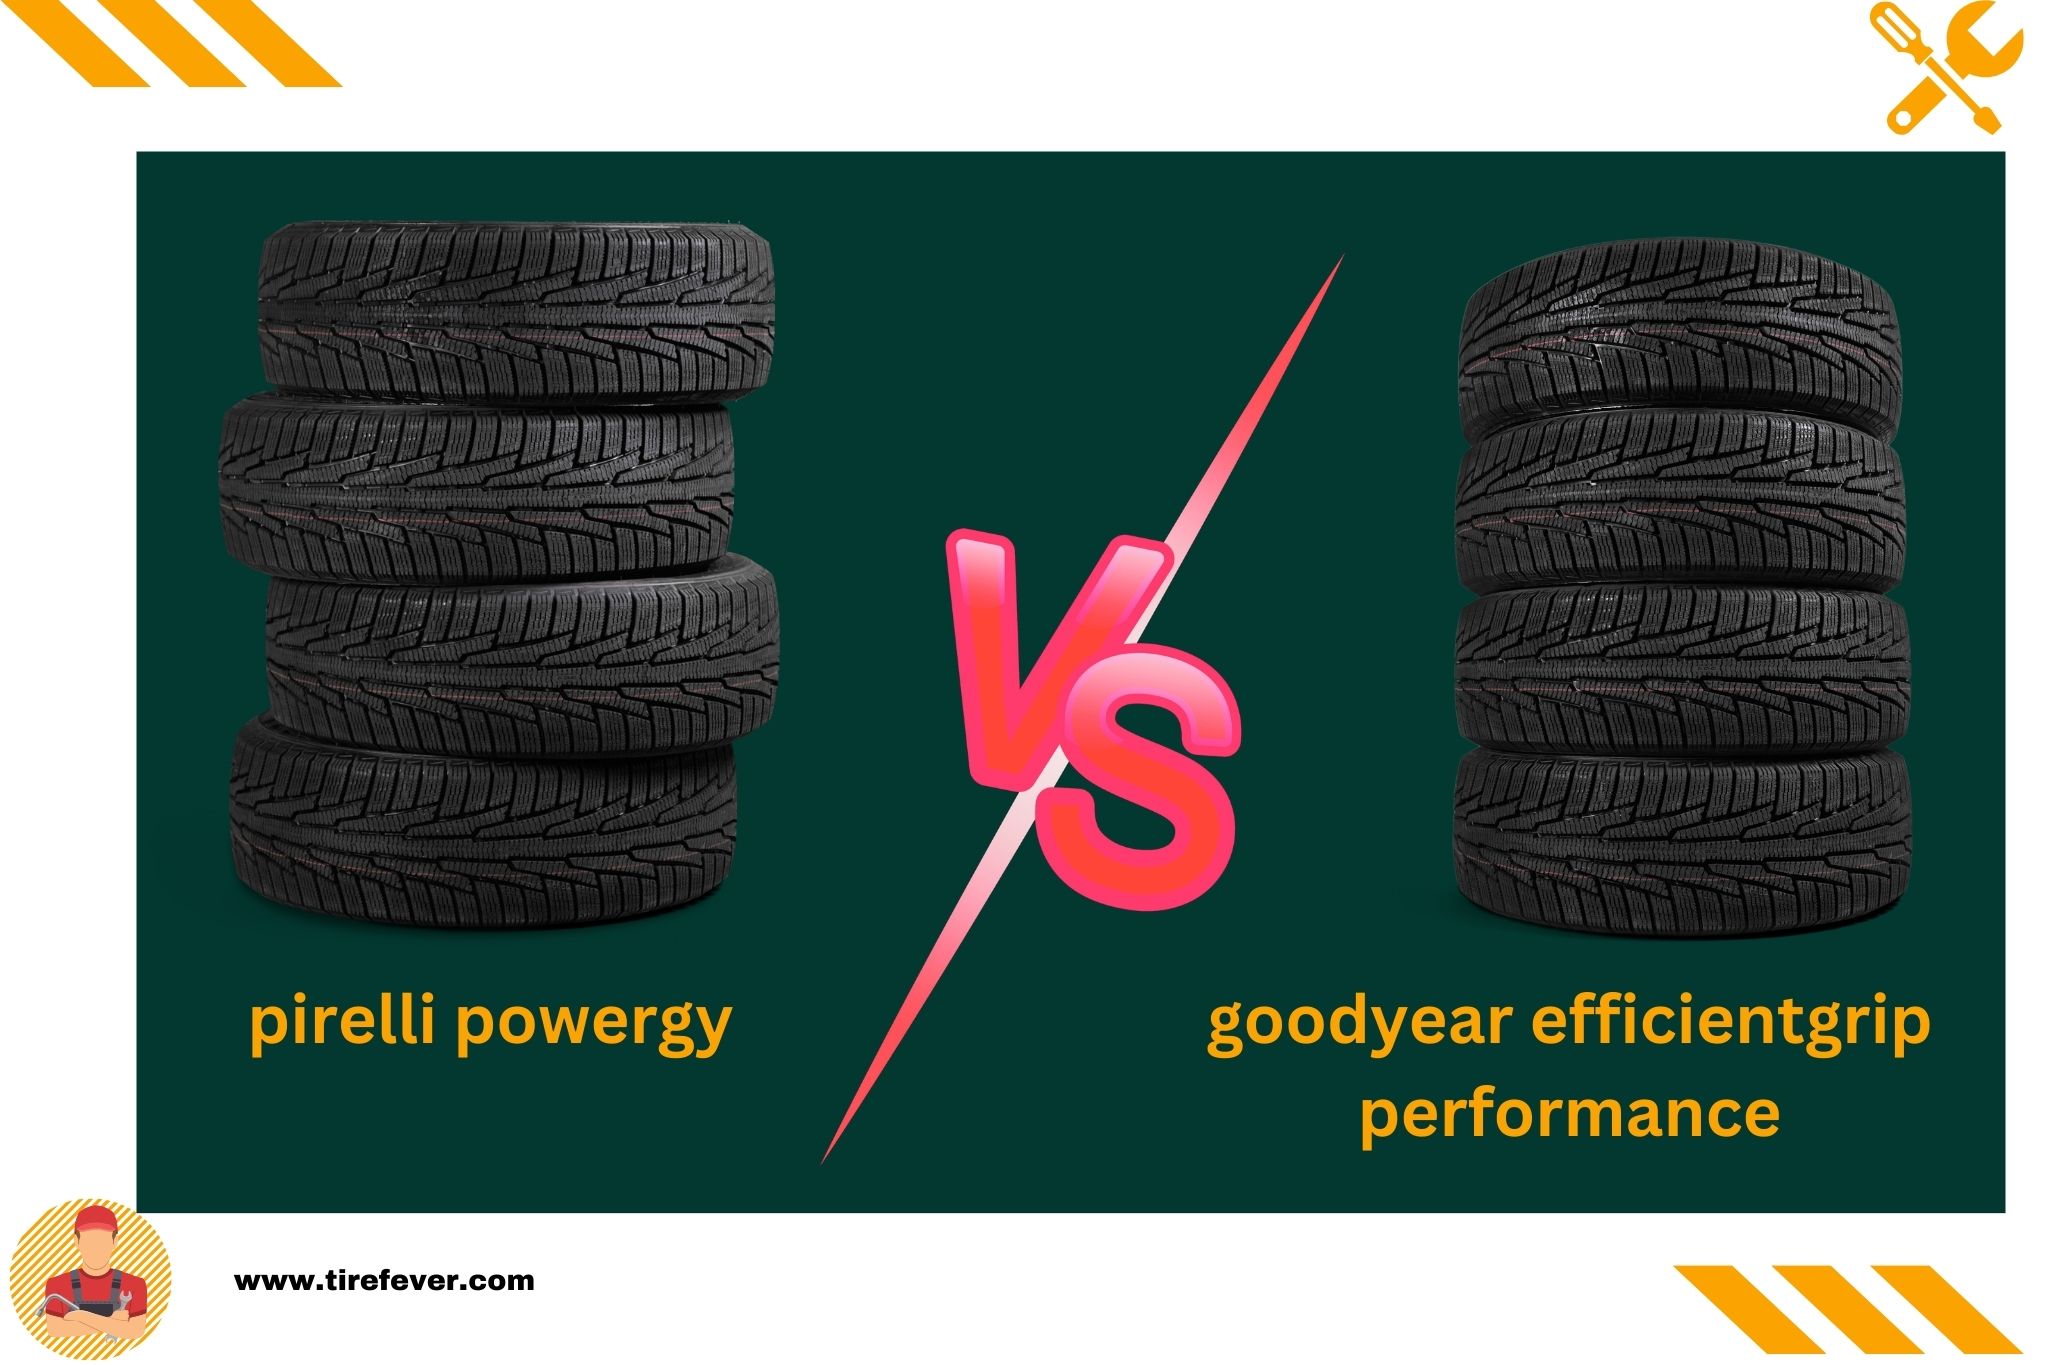 pirelli powergy vs goodyear efficientgrip performance